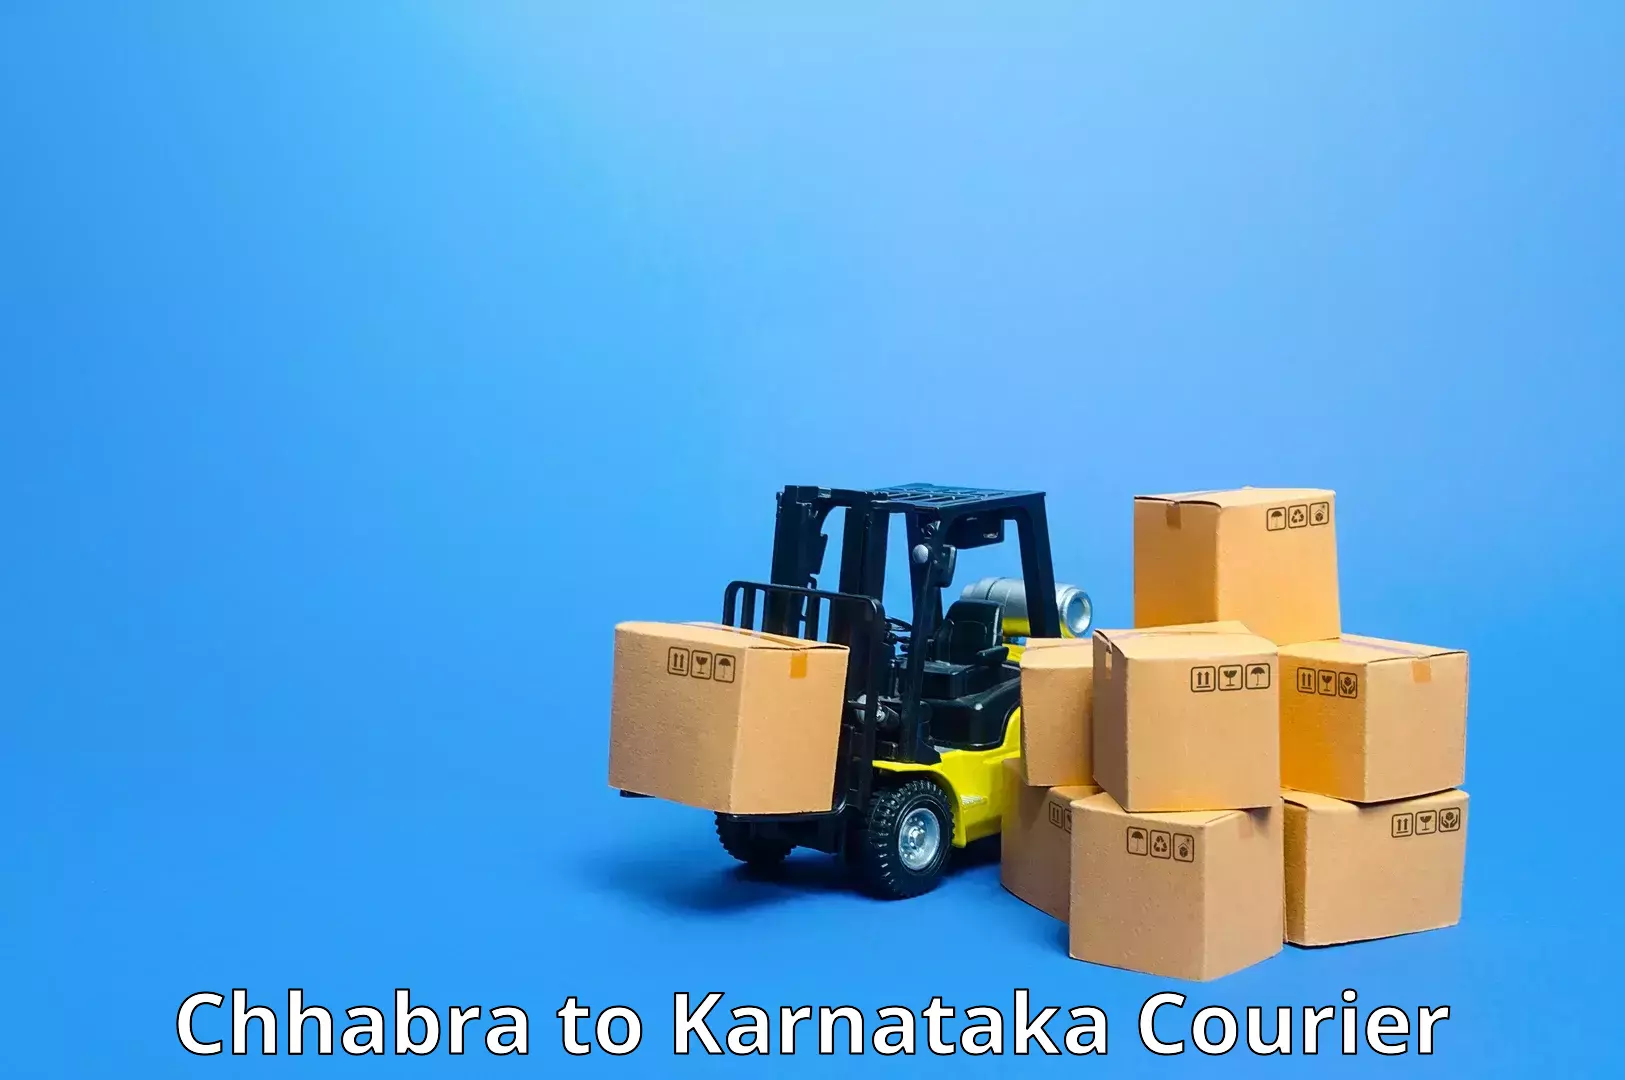 Tech-enabled shipping Chhabra to Nanjangud